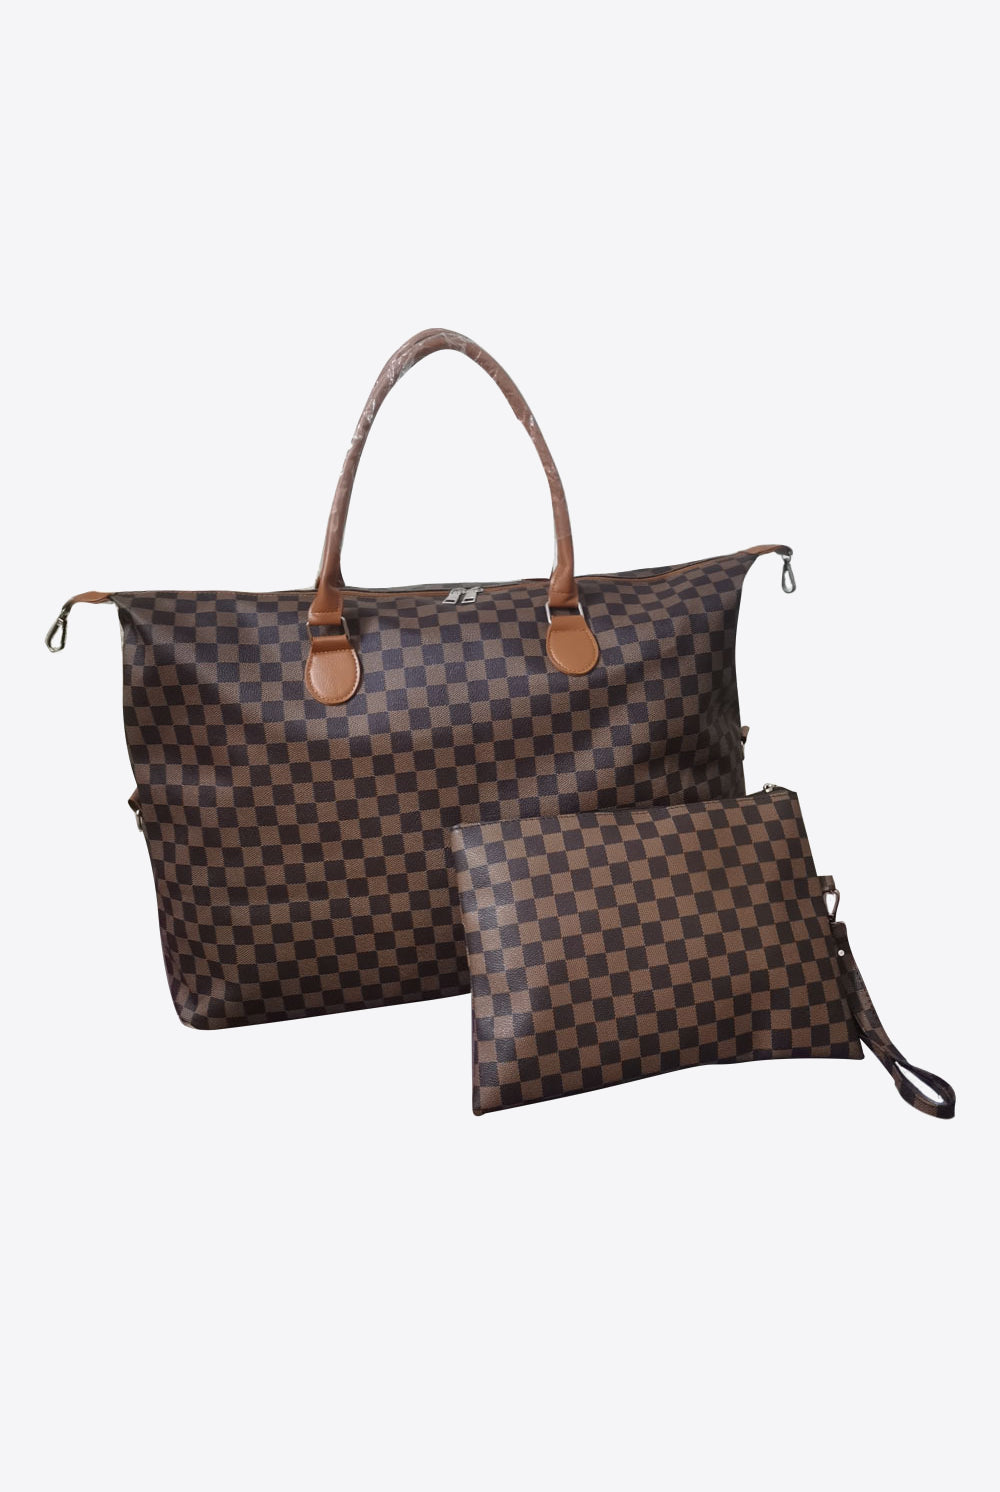 Dark Slate Gray Checkered Two-Piece Bag Set Handbags